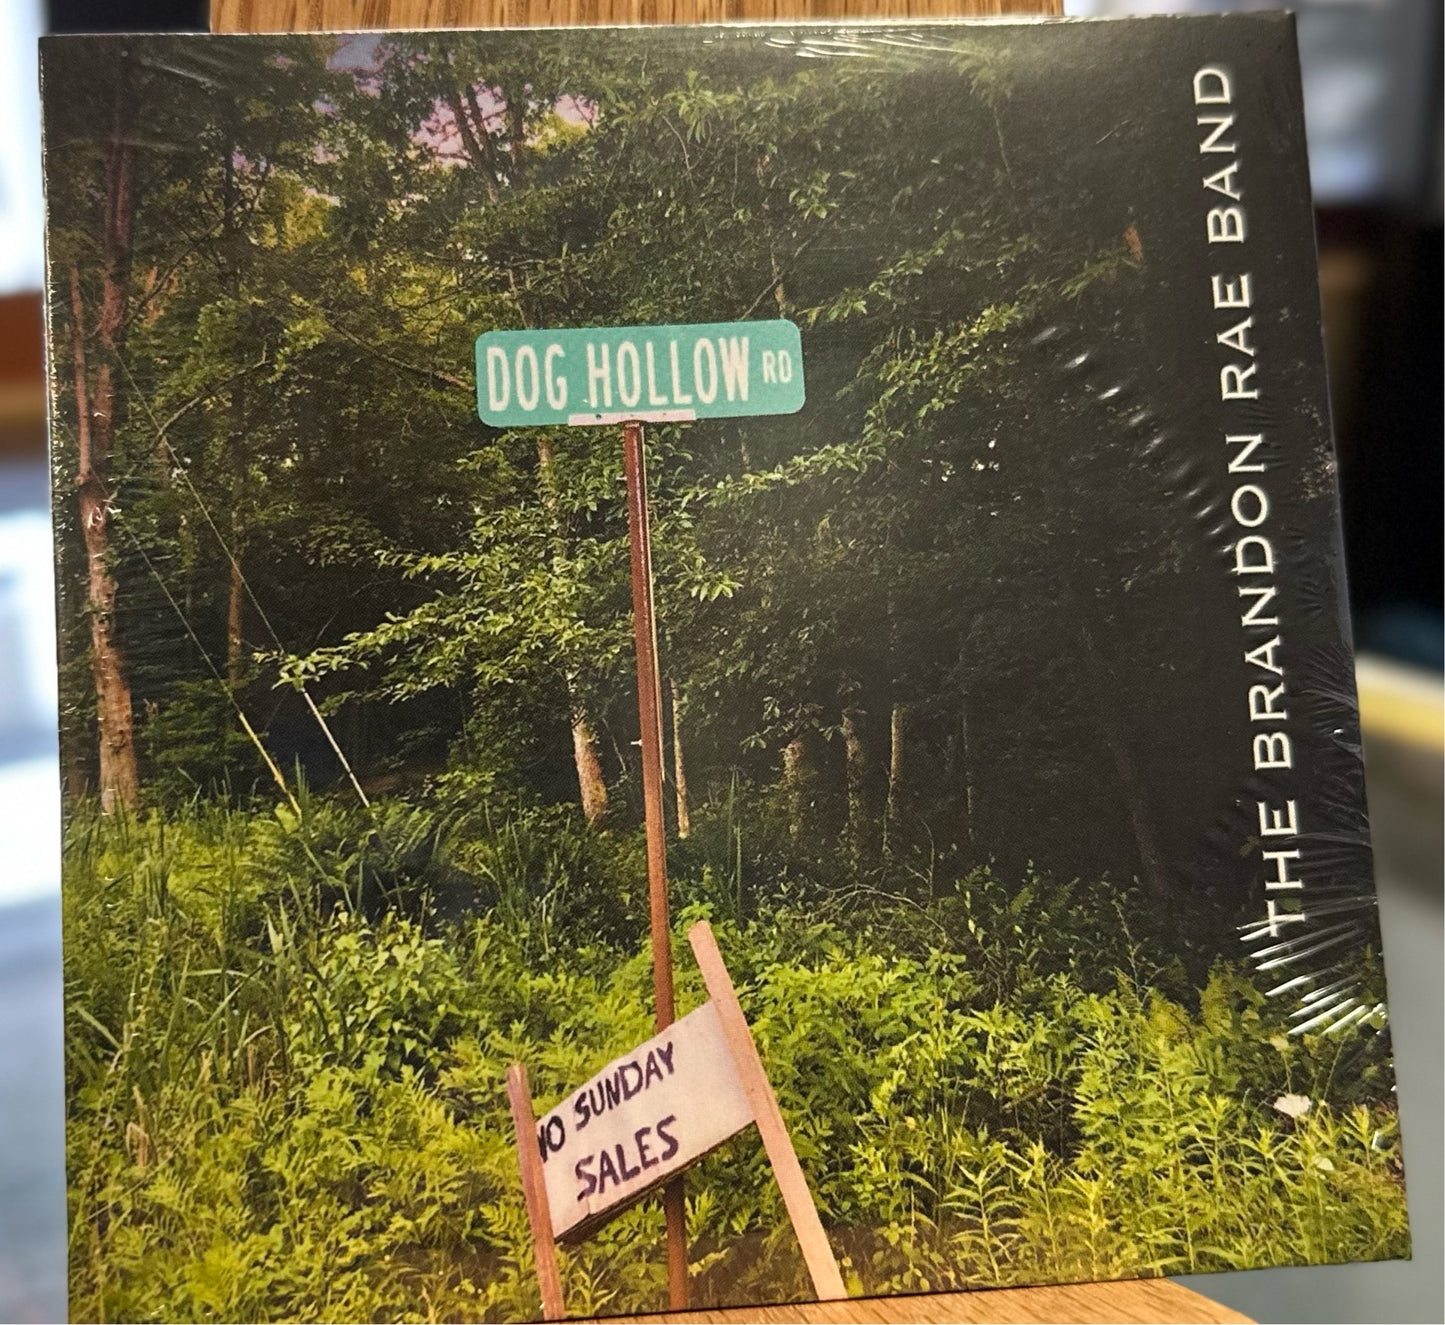 The Brandon Rae Band - Dog Hollow Rd. - CD